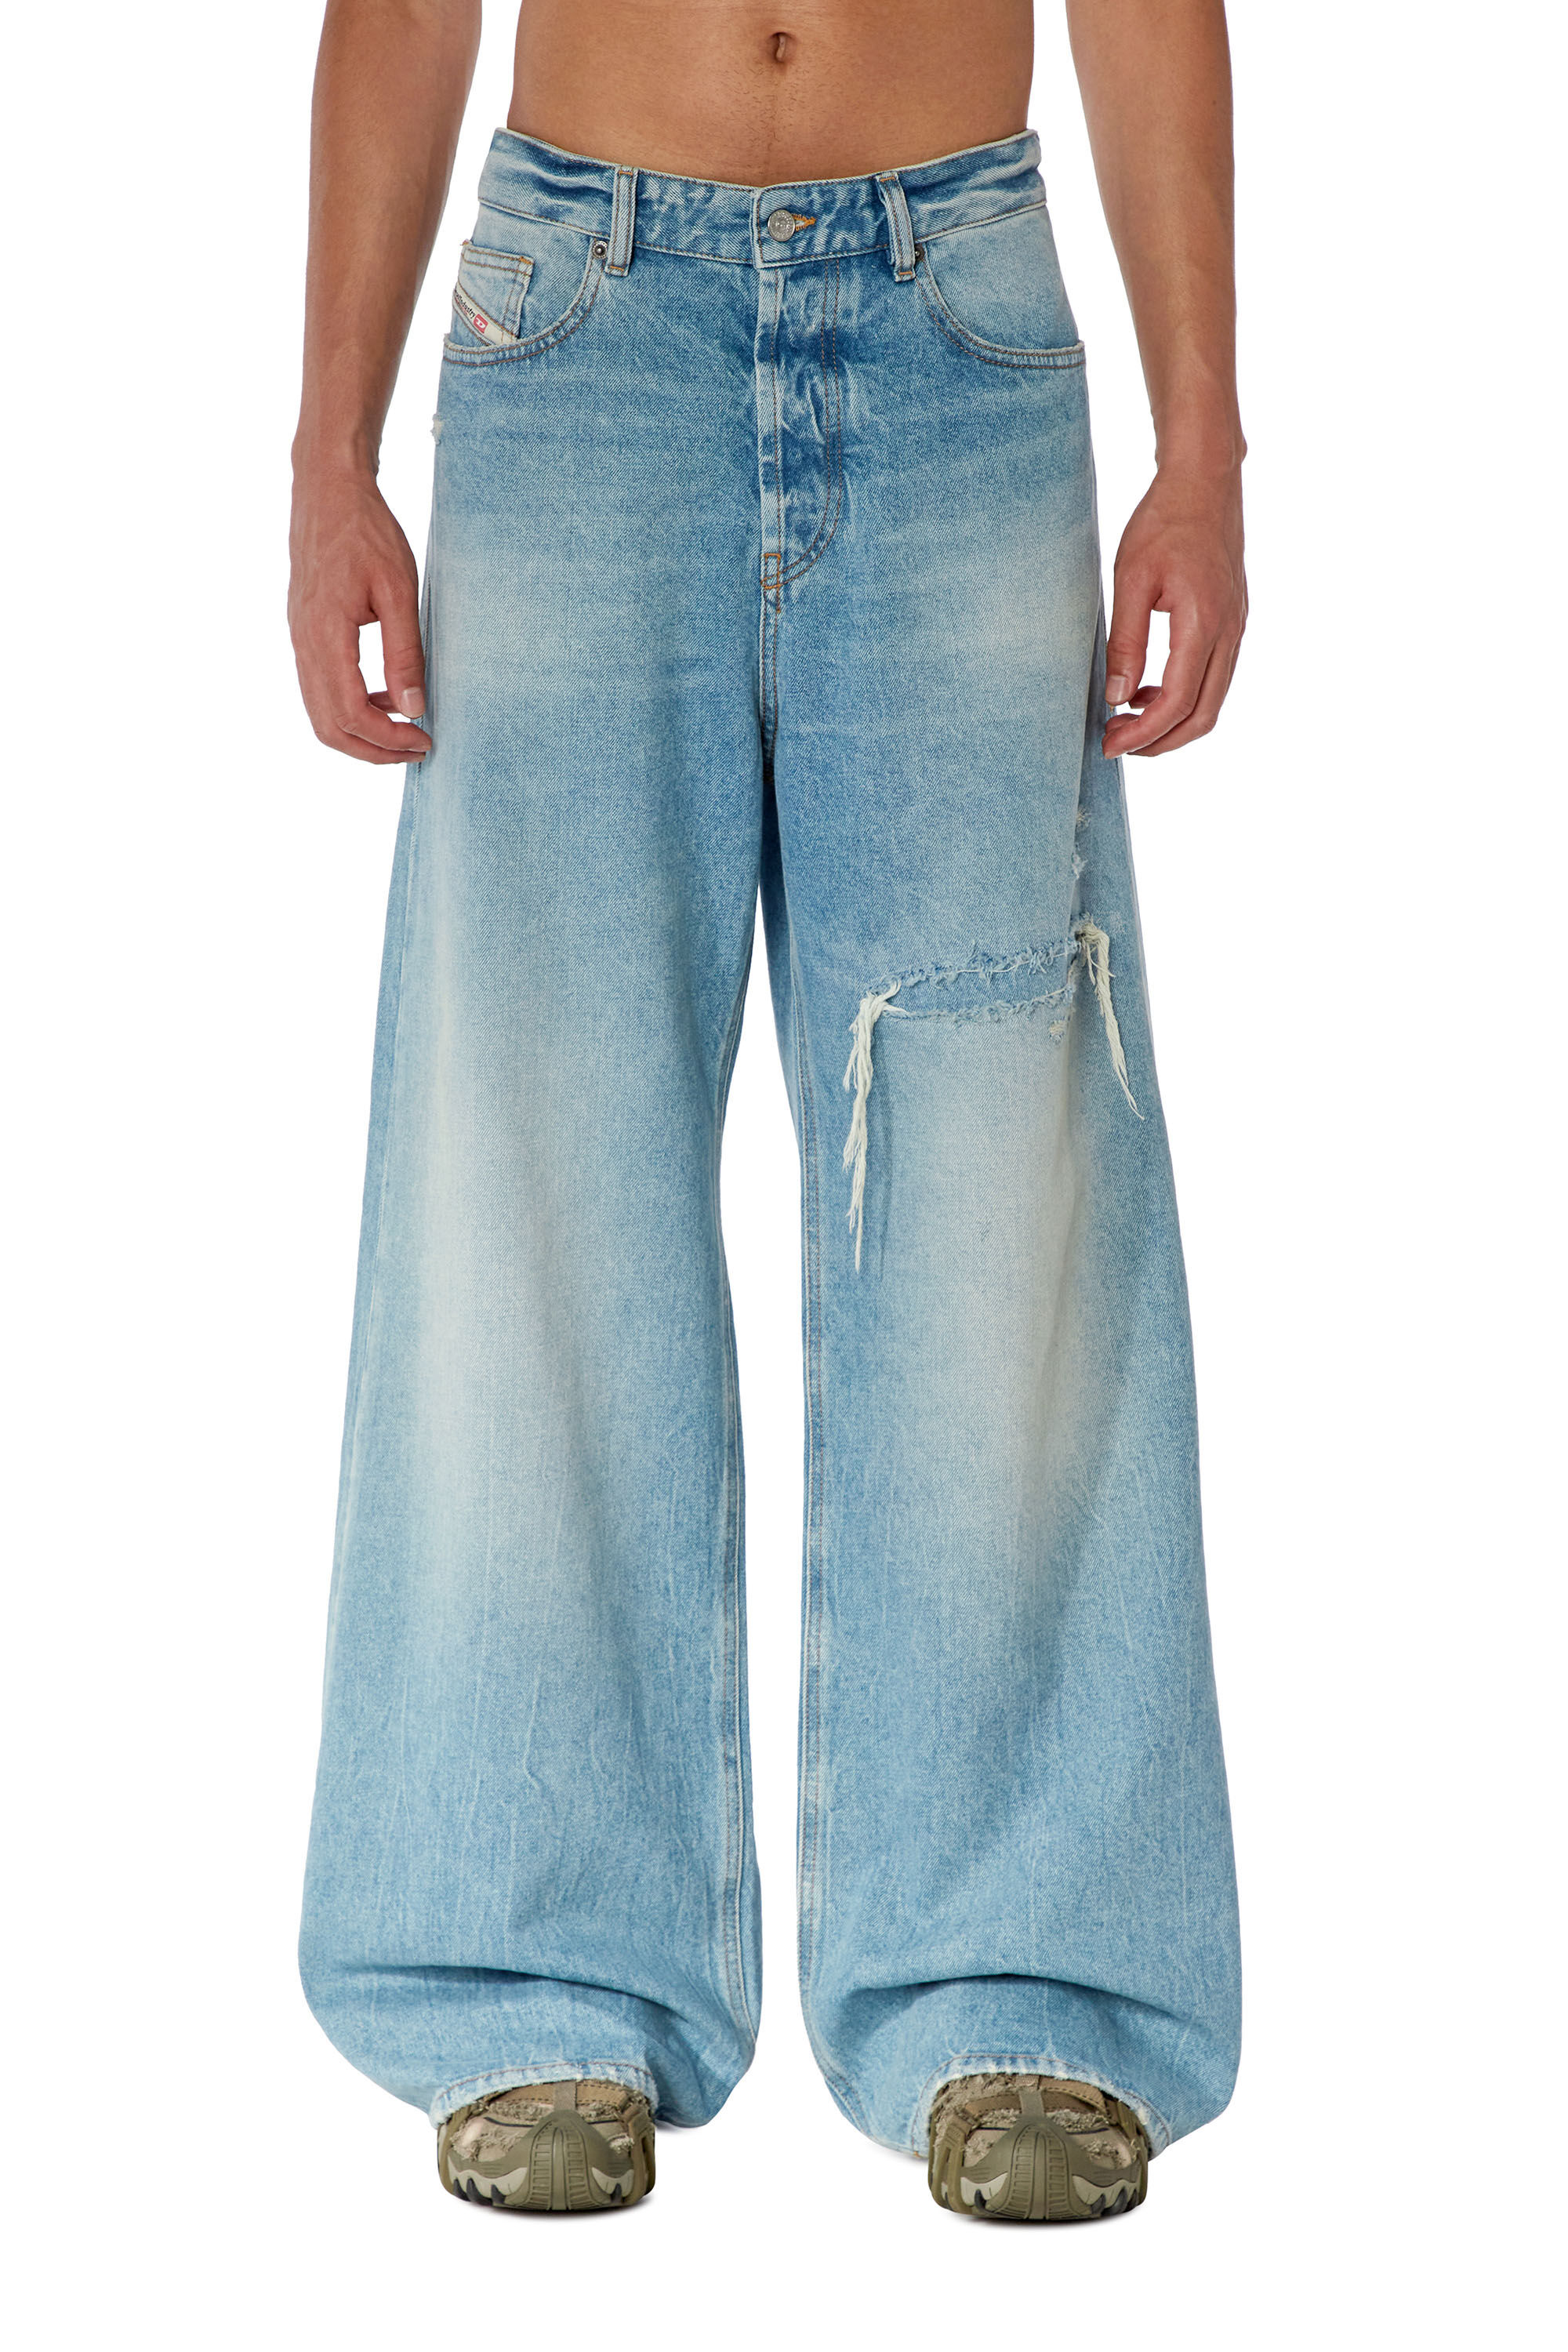 DIESEL Straight Jeans D-Rise denim 09e25